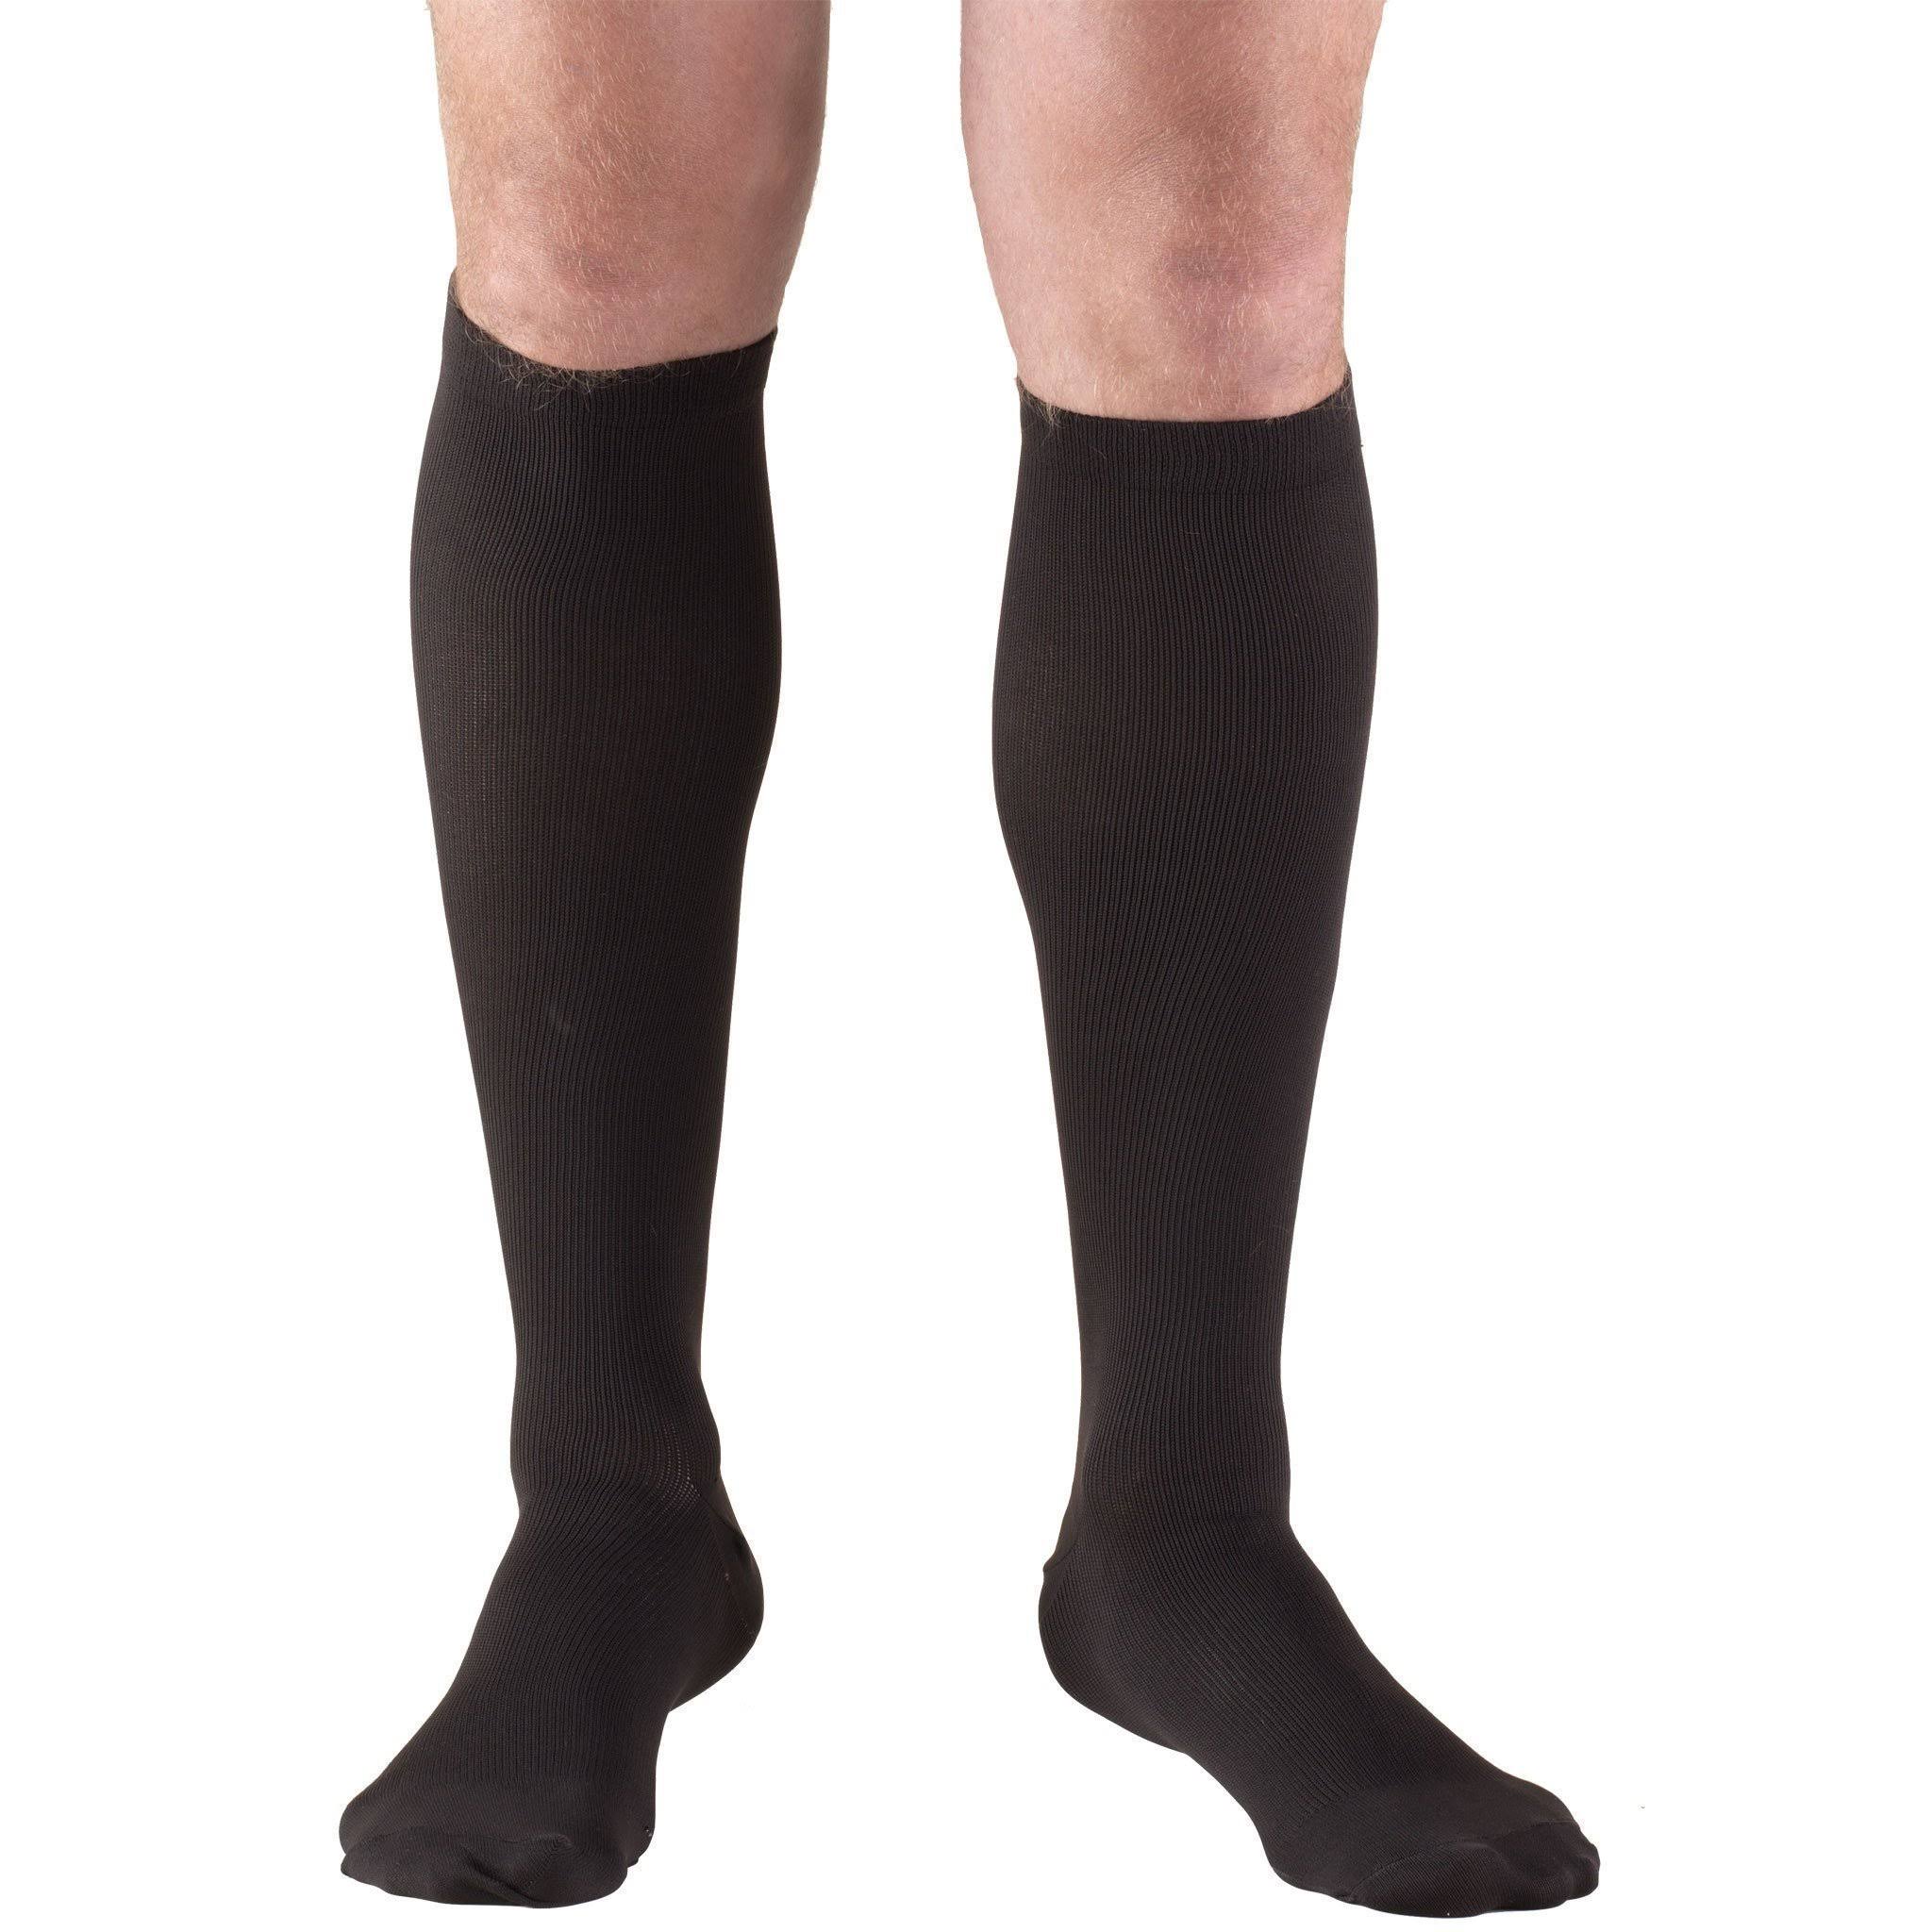 Truform Diabetic Socks - Black, 3 Pairs